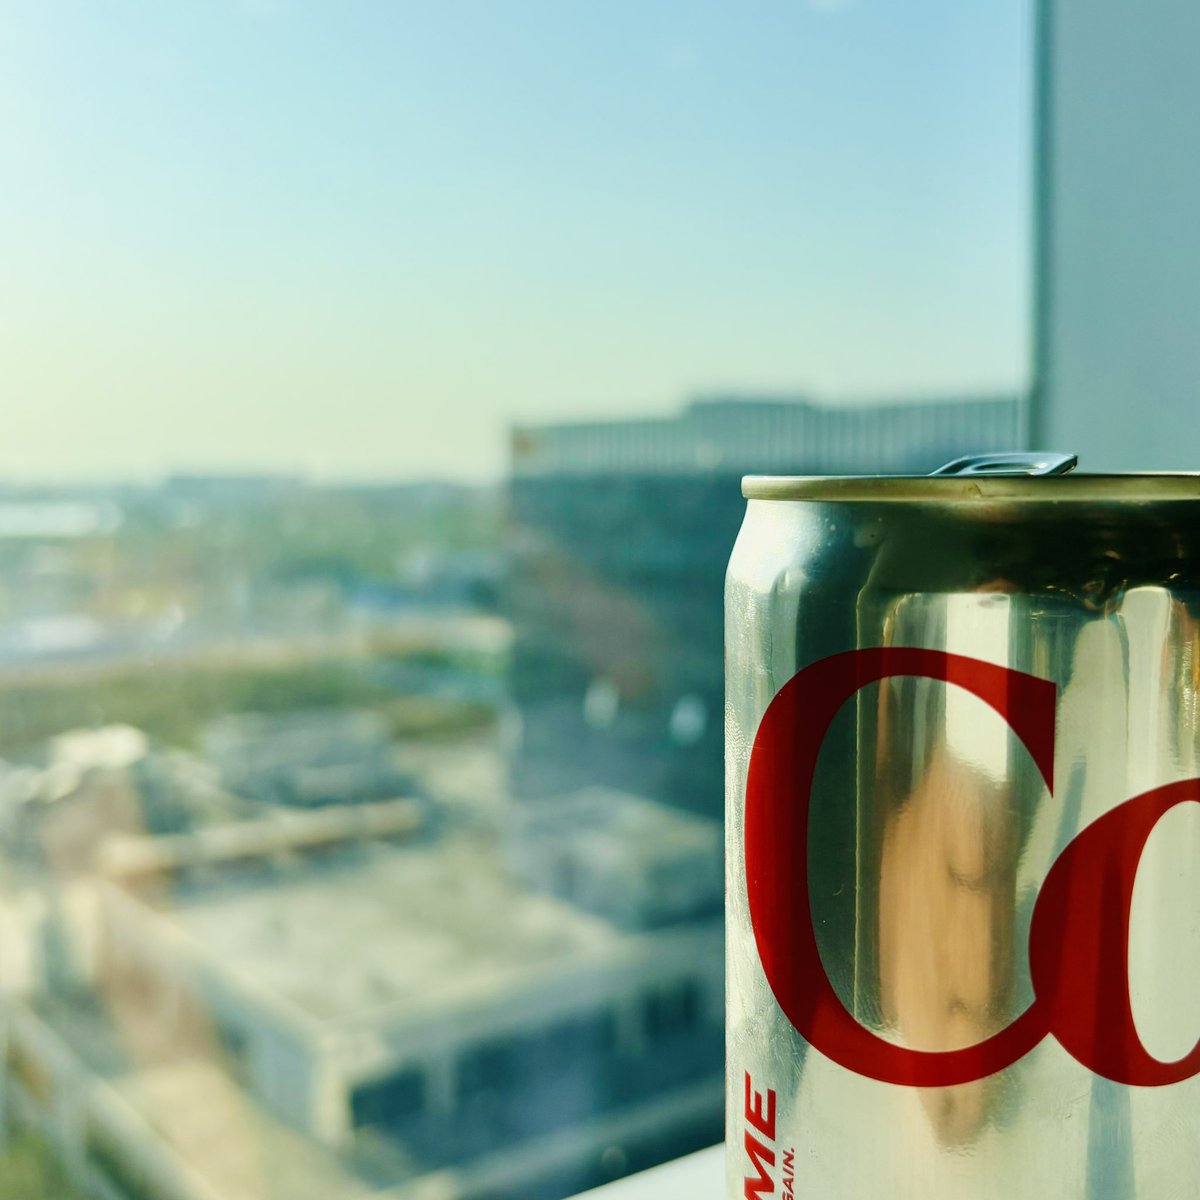 I HAVE NEVER SEEN A THIN PERSON DRINKING DIET COKE 😅 #coke #dietcoke #fun #drink #sunny #office #vendingmachine #shotoniphone